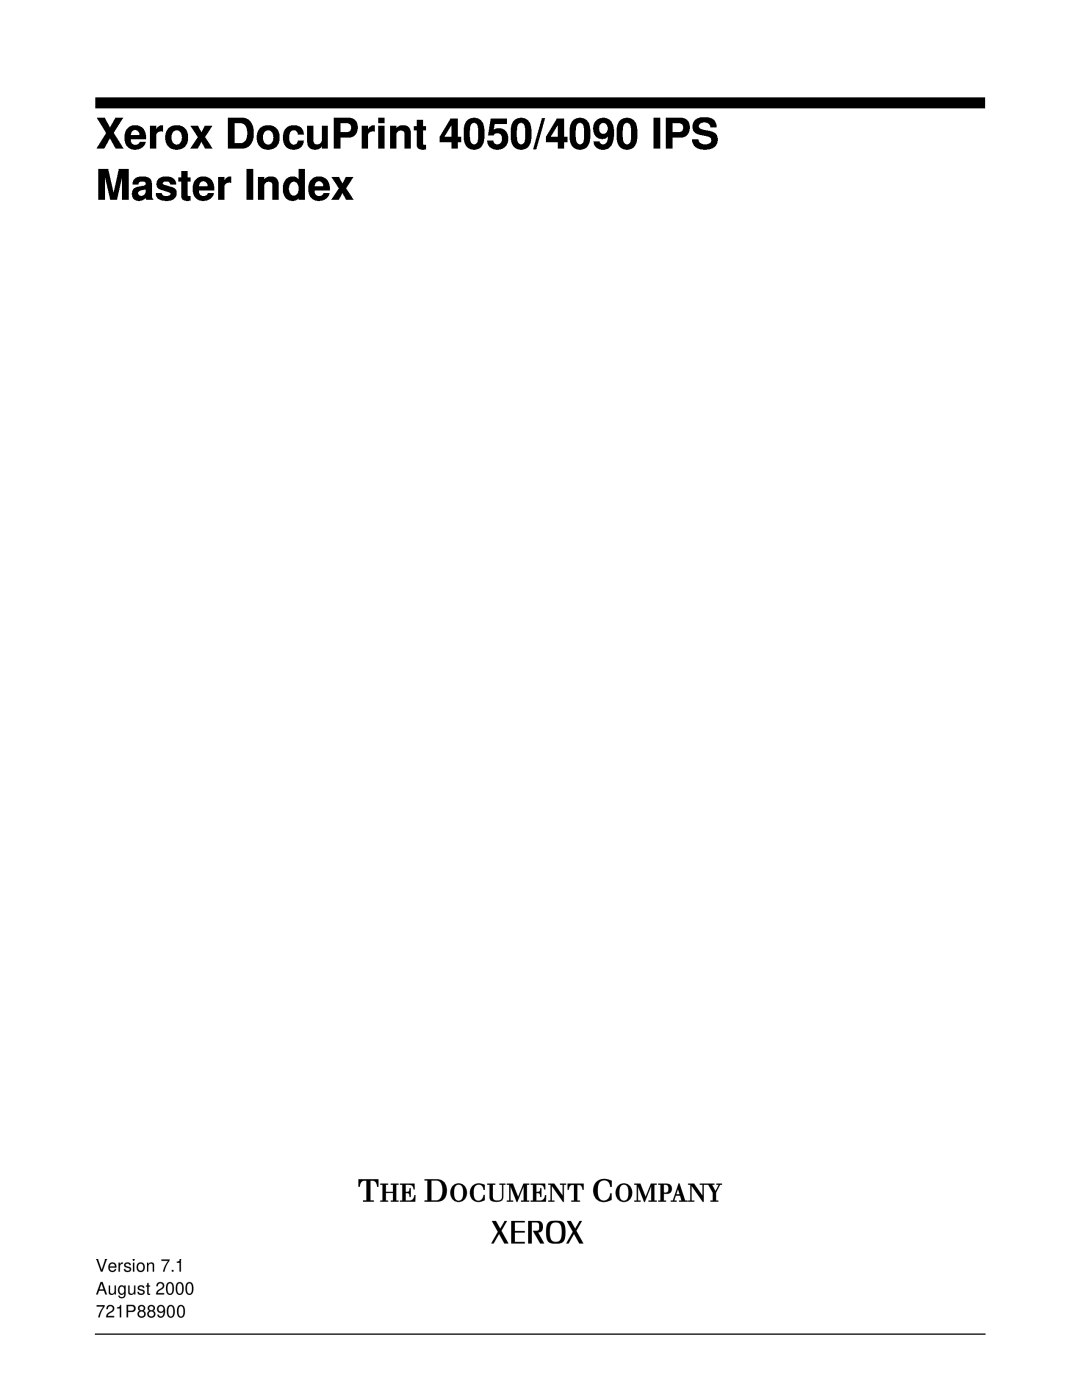 Xerox 4050 IPS manual Xerox DocuPrint 4050/4090 IPS Master Index, Version 7.1 August 2000 721P88900 